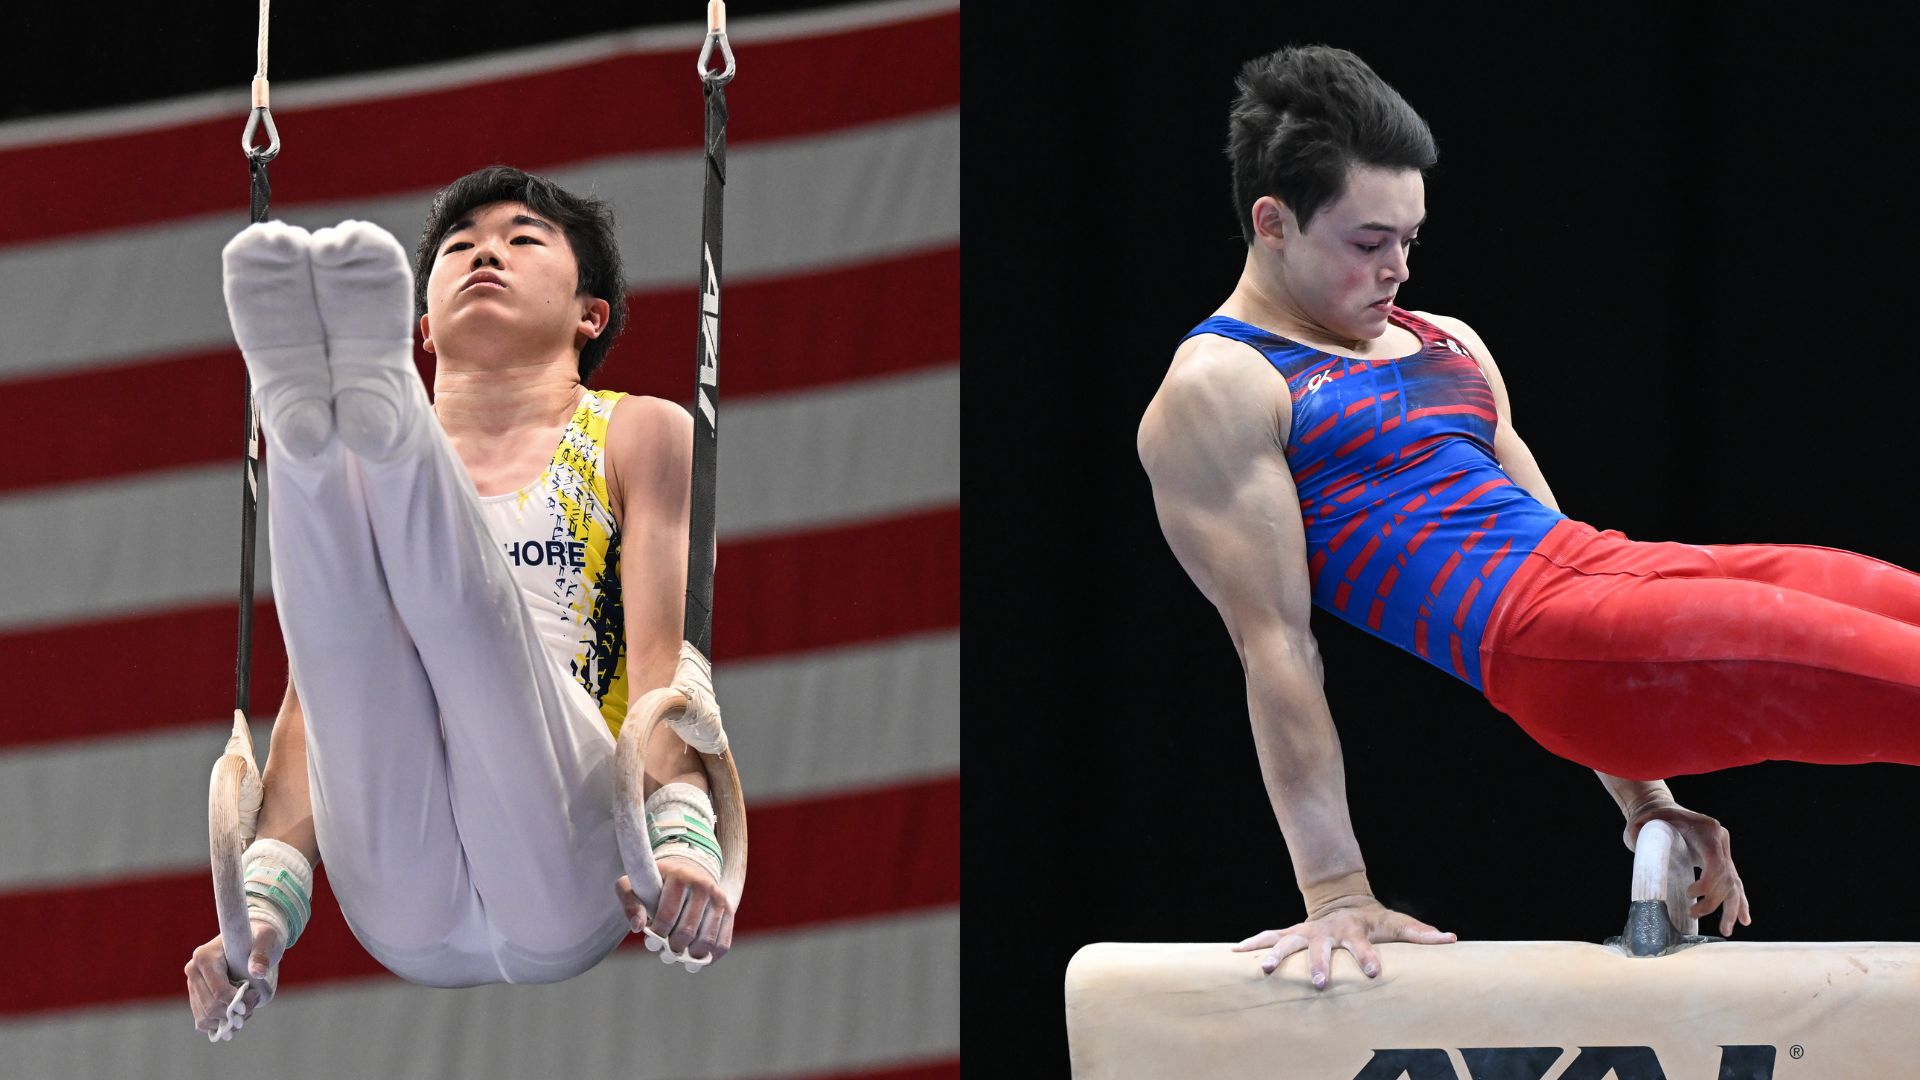 2022 OOFOS U.S. Gymnastics Championships: Kai Uemura, David Shamah lead junior men’s divisions after Day 1